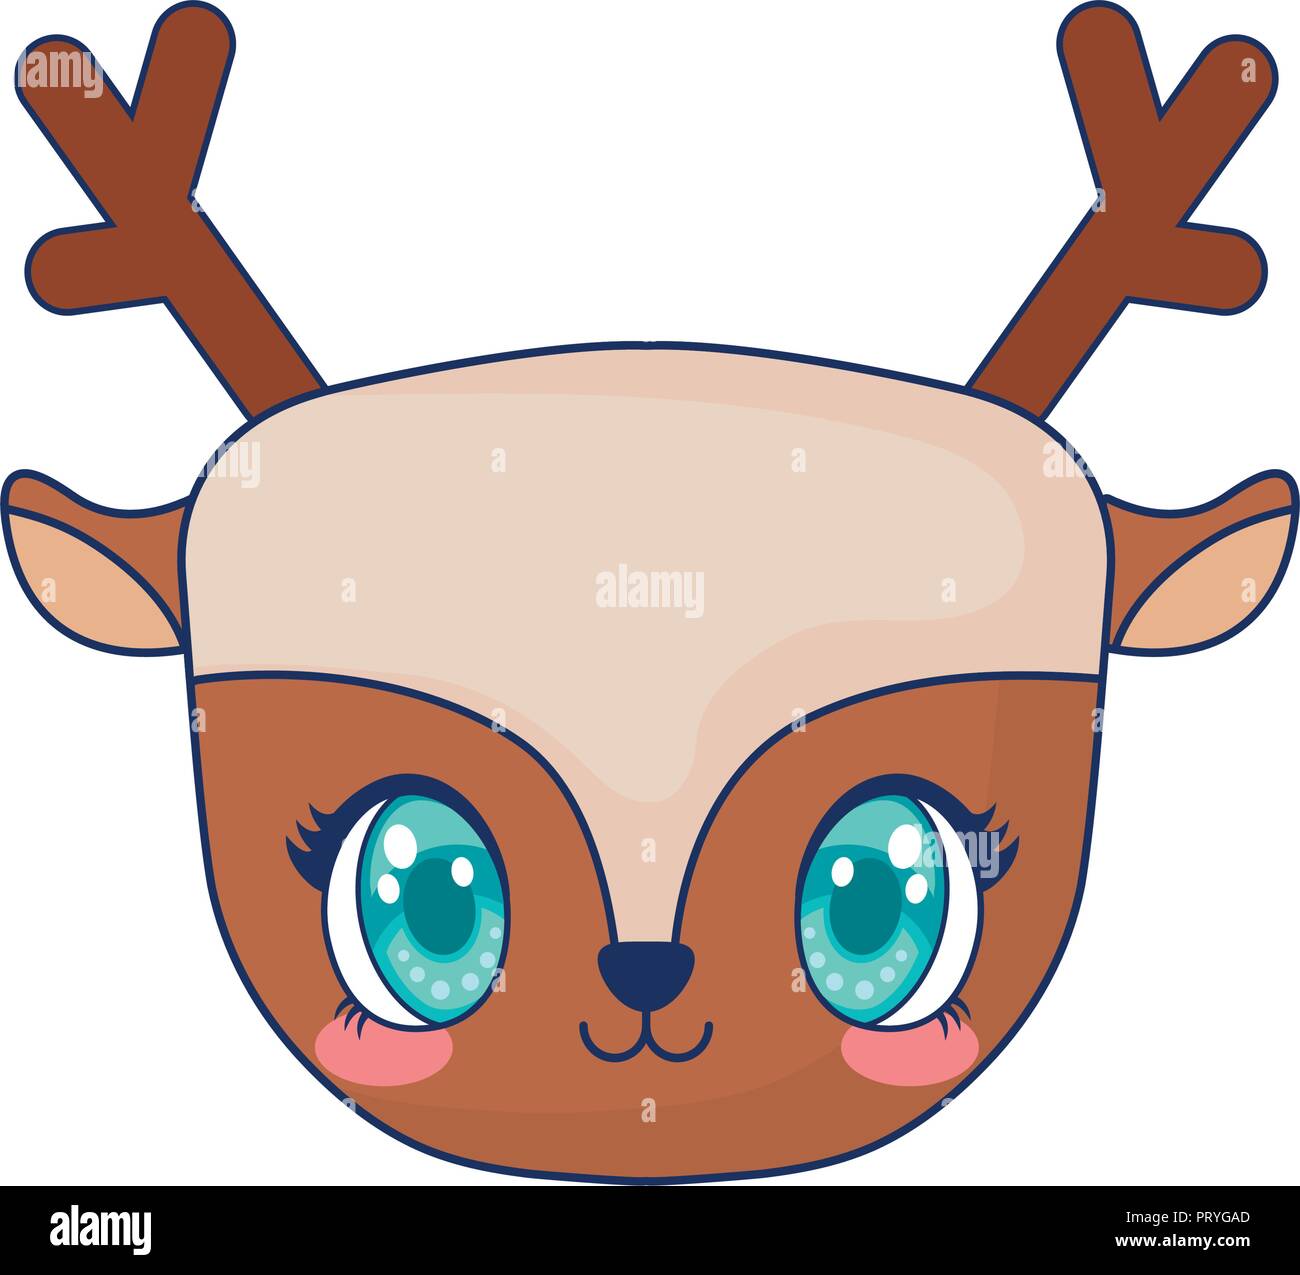 cute reindeer adorable character vector illustration design Stock